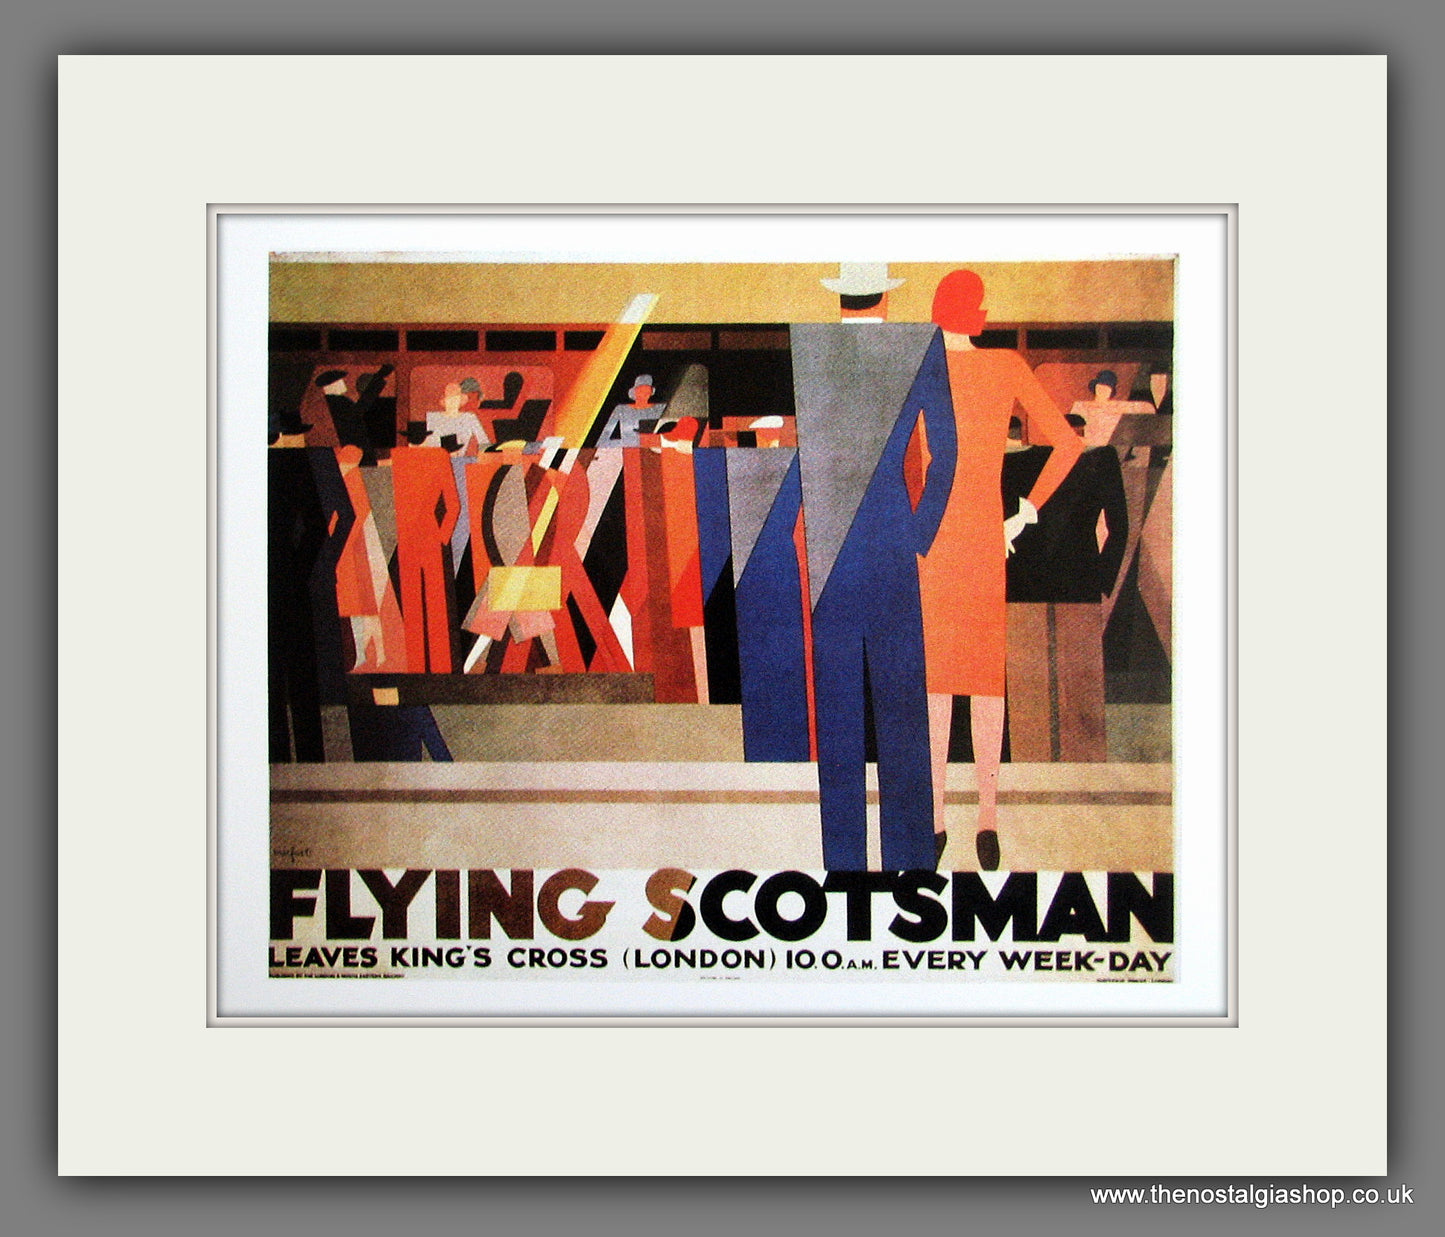 Flying Scotsman. Kings Cross. Railway Travel Advert. (Reproduction). Mounted Print.